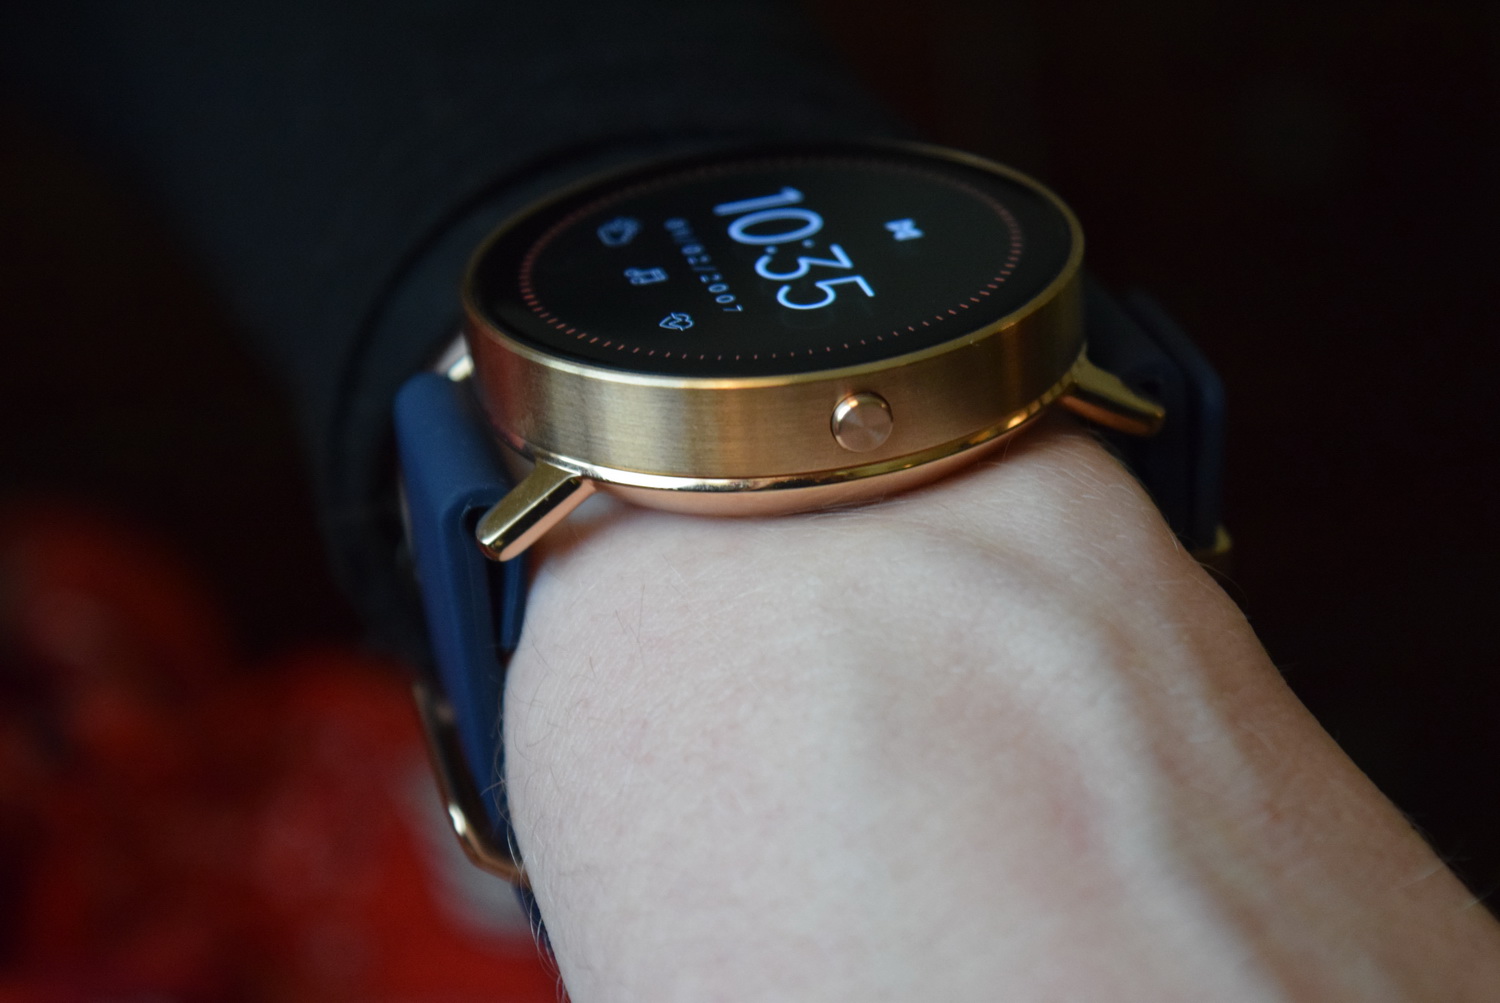 Misfit Vapor smartwatch hands on